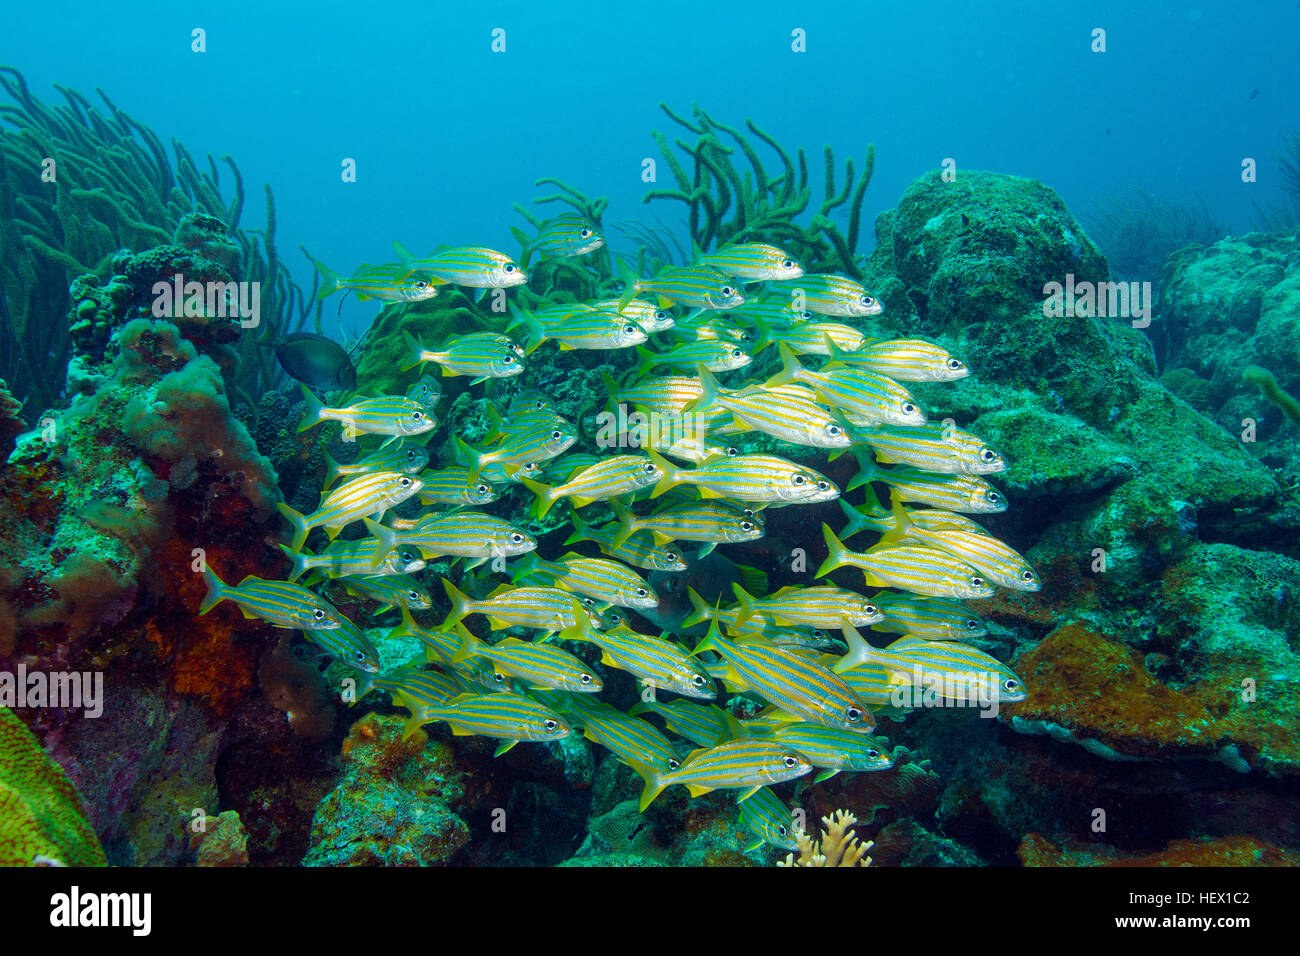 School of Smallmouth grunt, Haemulon chrysargyreum, swimming in a Caribbean reef. Stock Photo